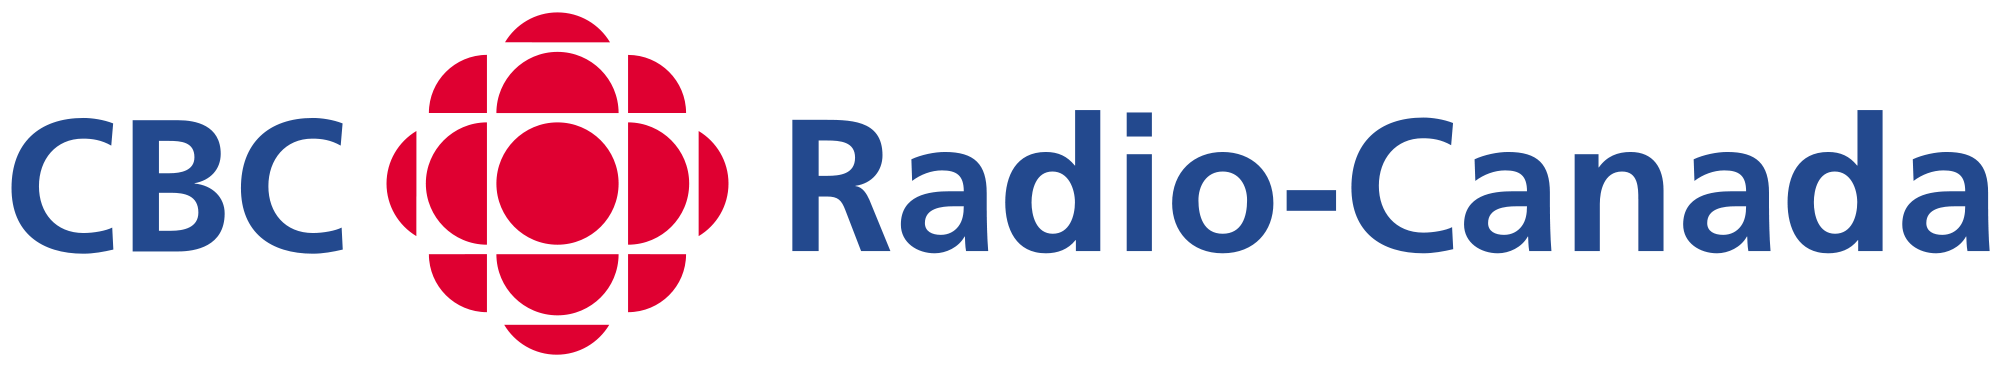 CBC-RadioCanada